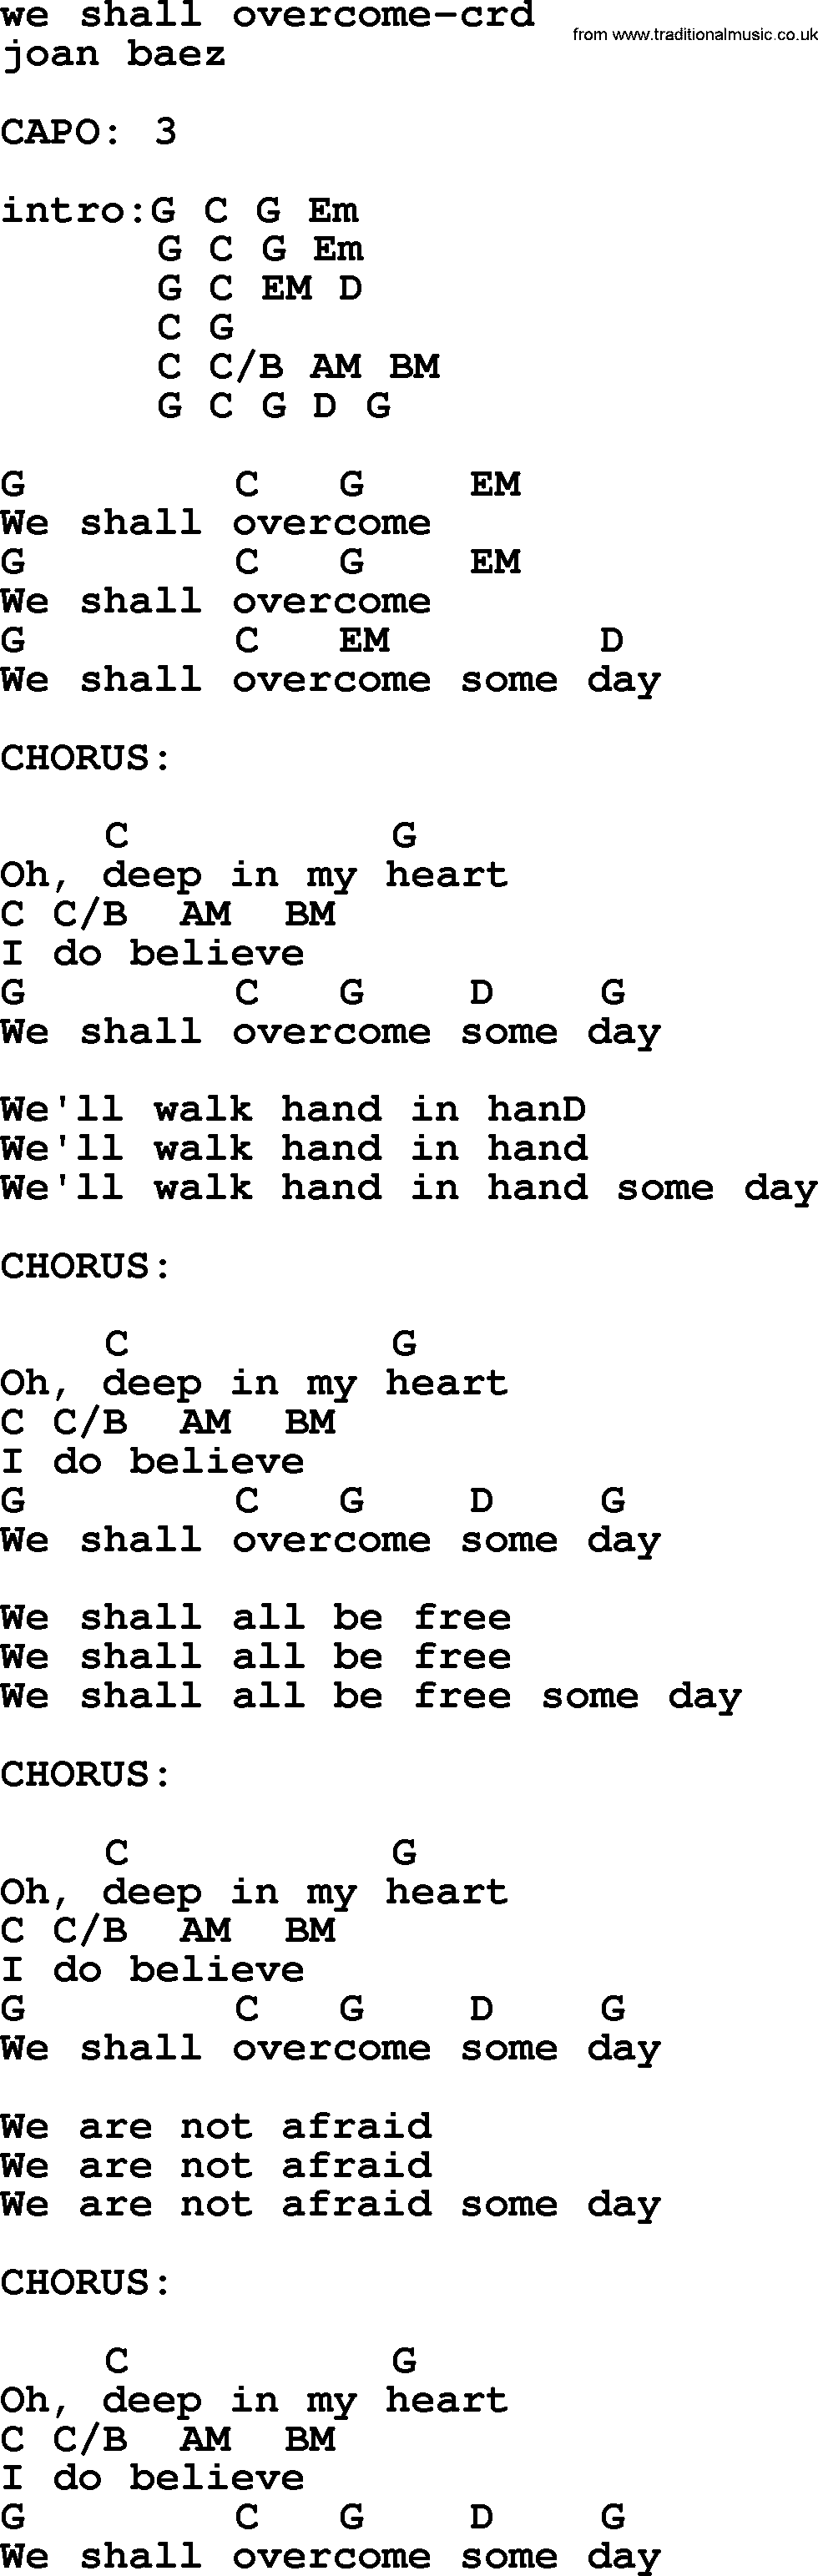 Joan Baez song We Shall Overcome lyrics and chords